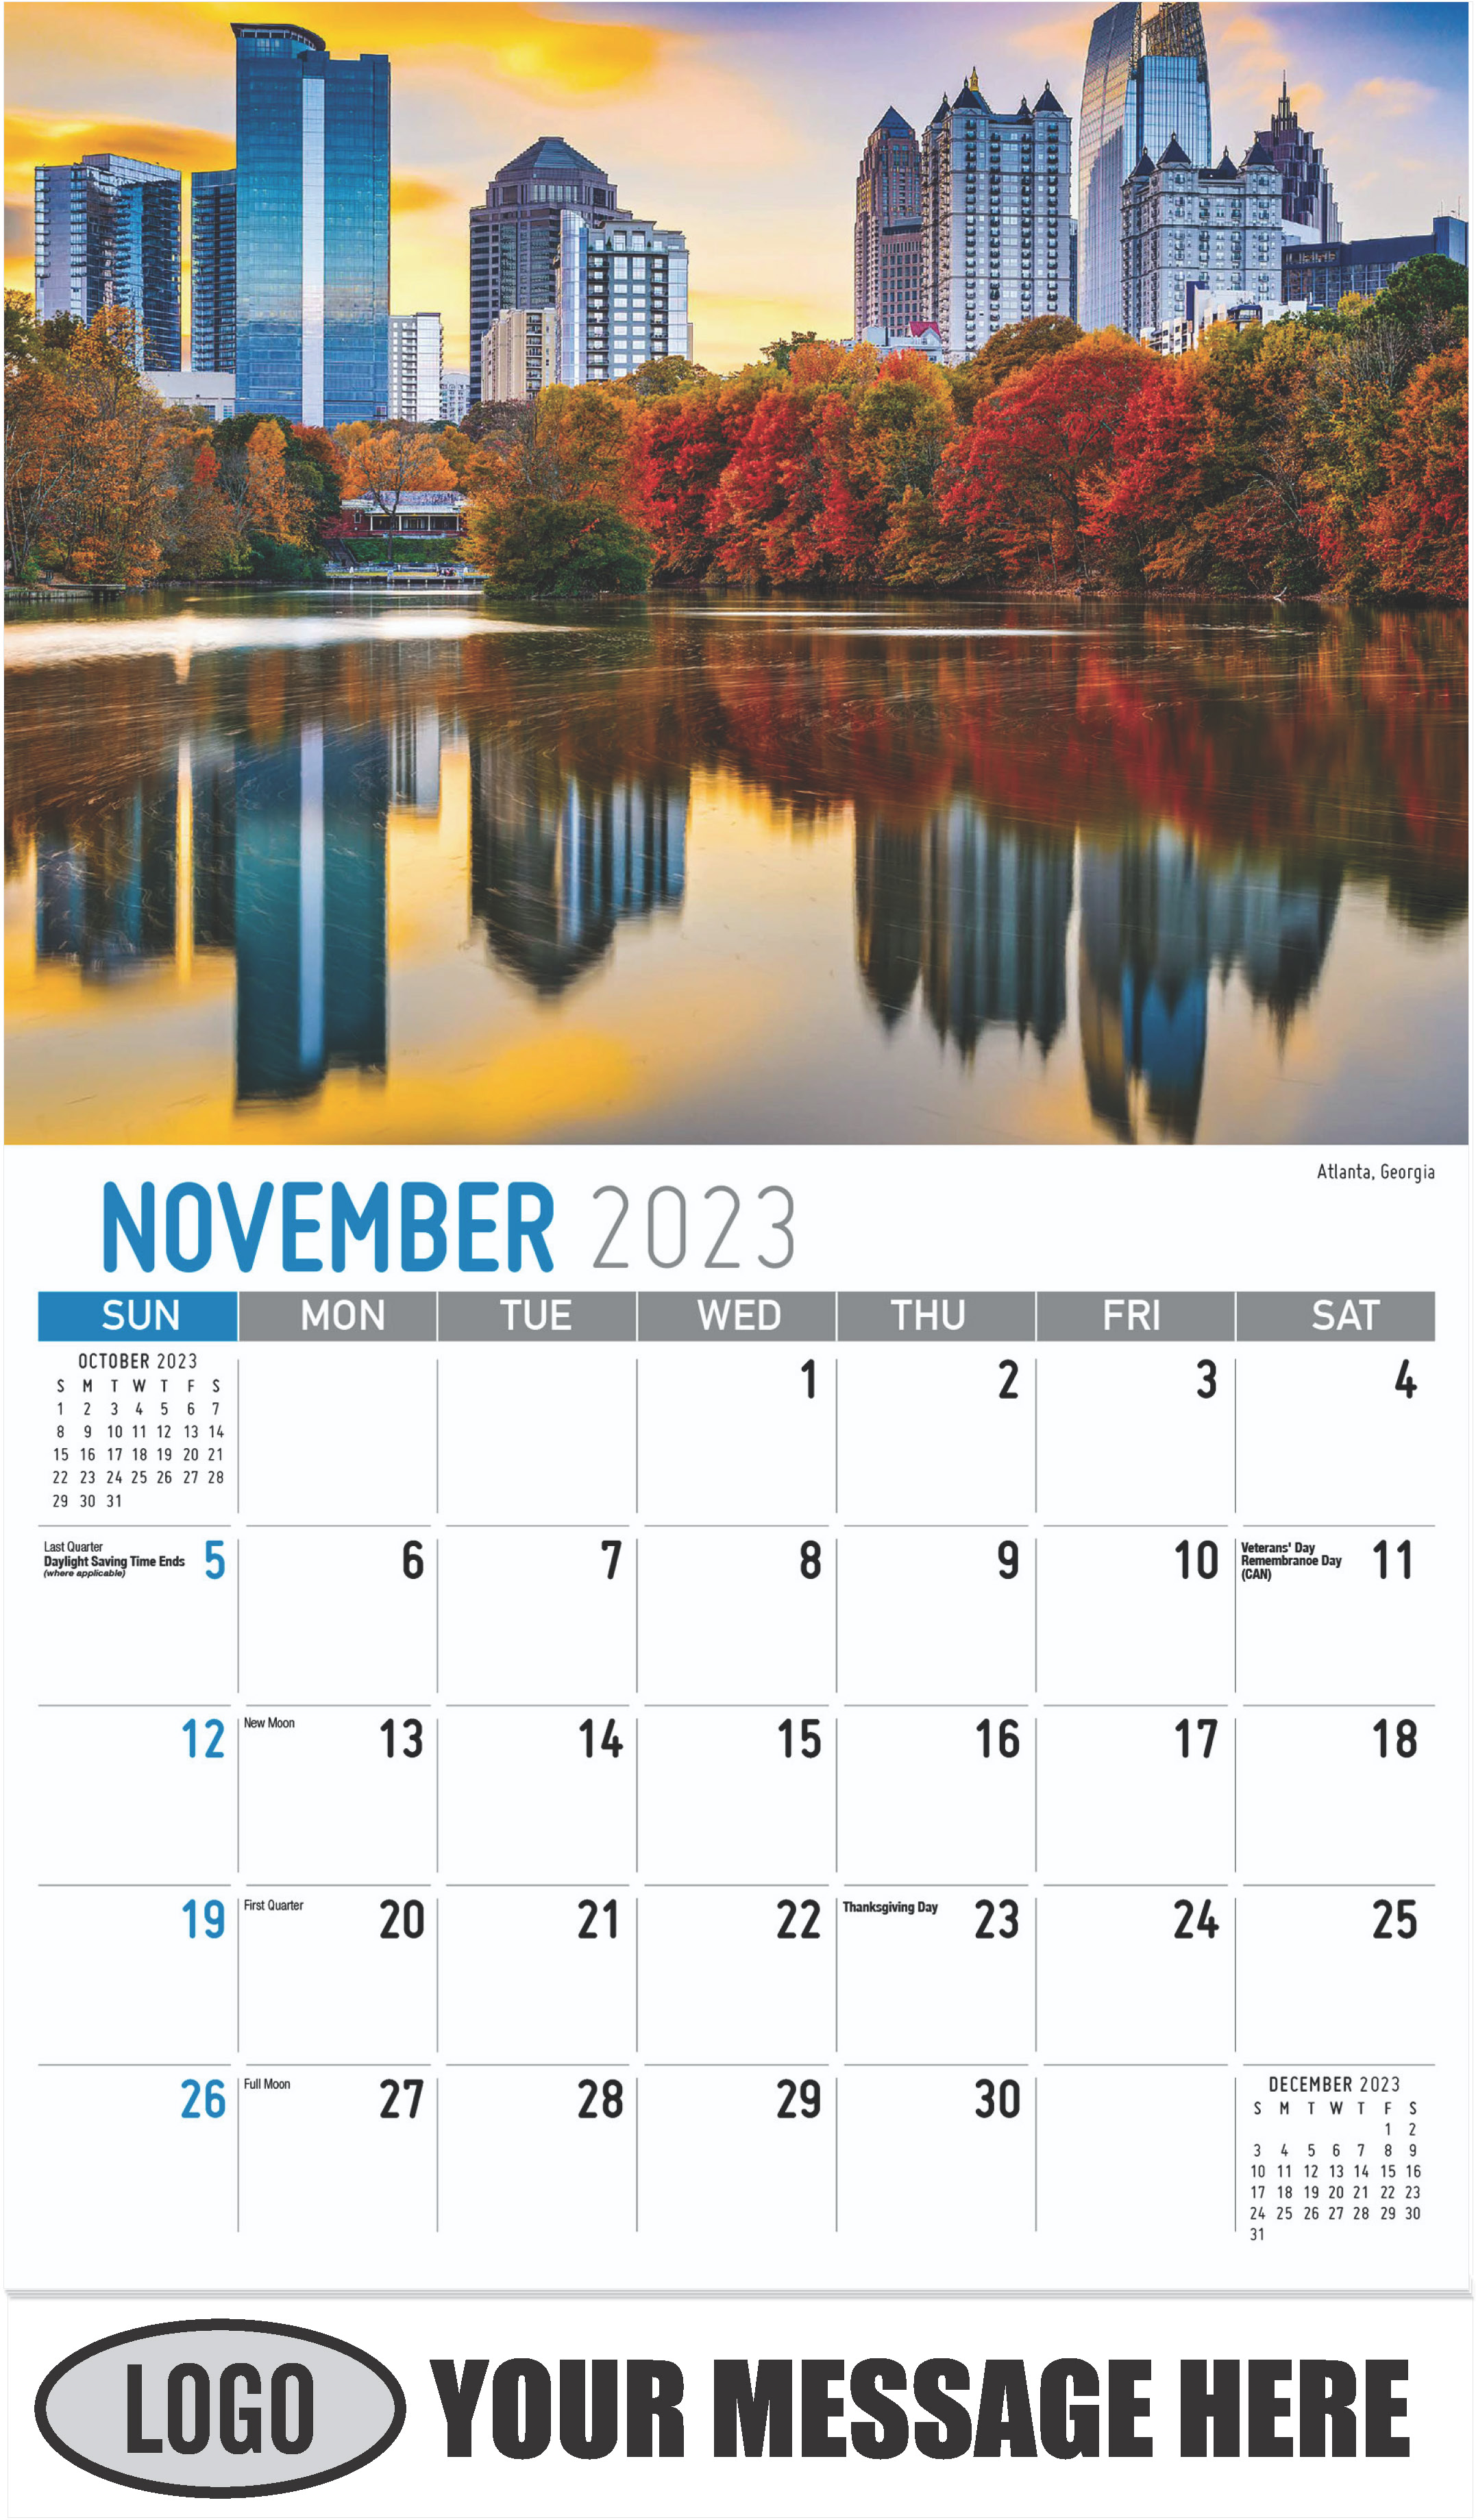 Atlanta, Georgia - November - Scenes of Southeast USA 2023 Promotional Calendar